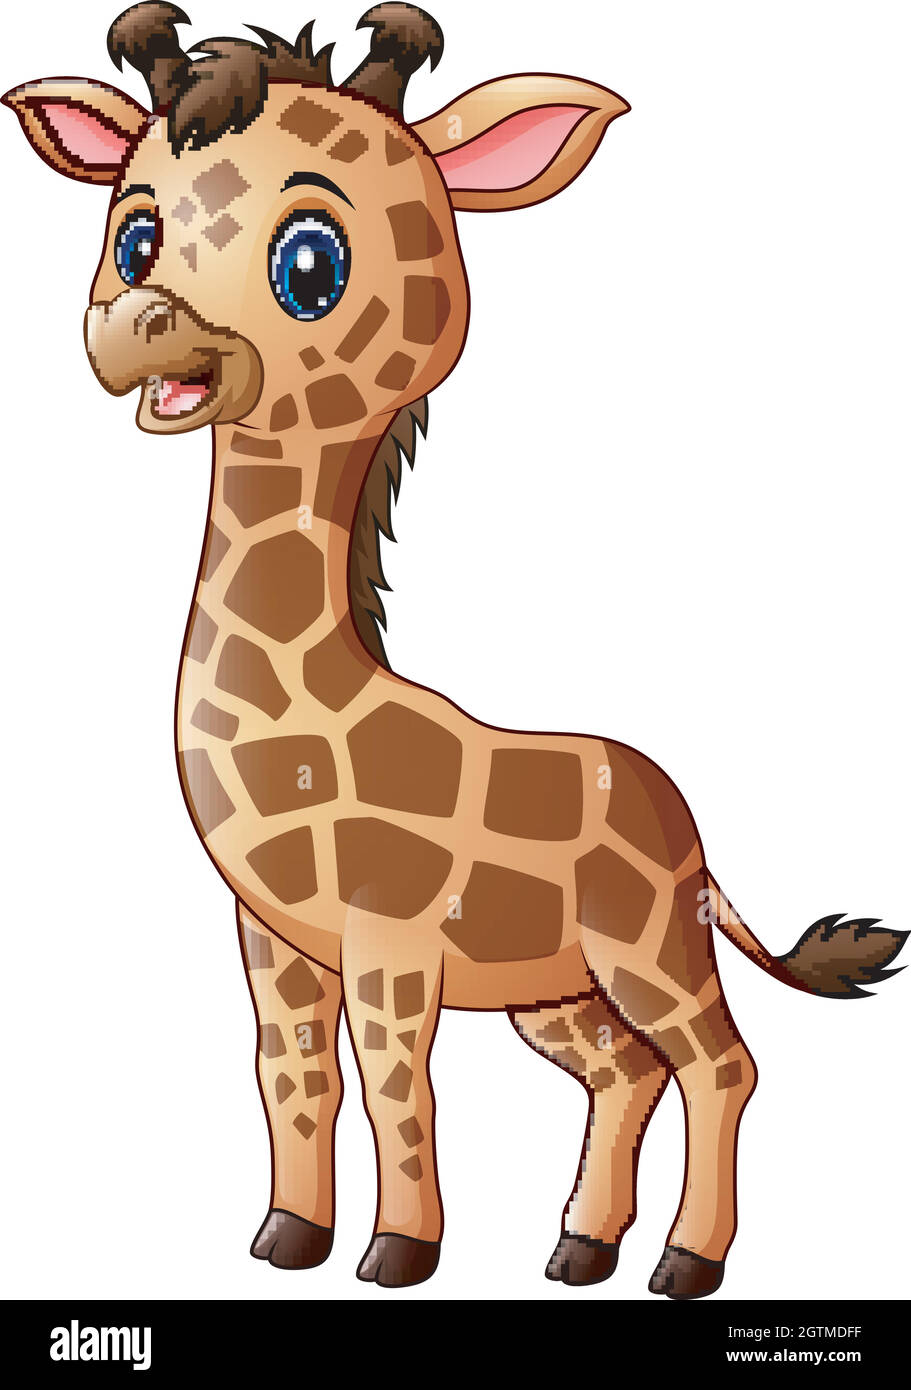 Cute giraffe cartoon isolated on white background Stock Vector